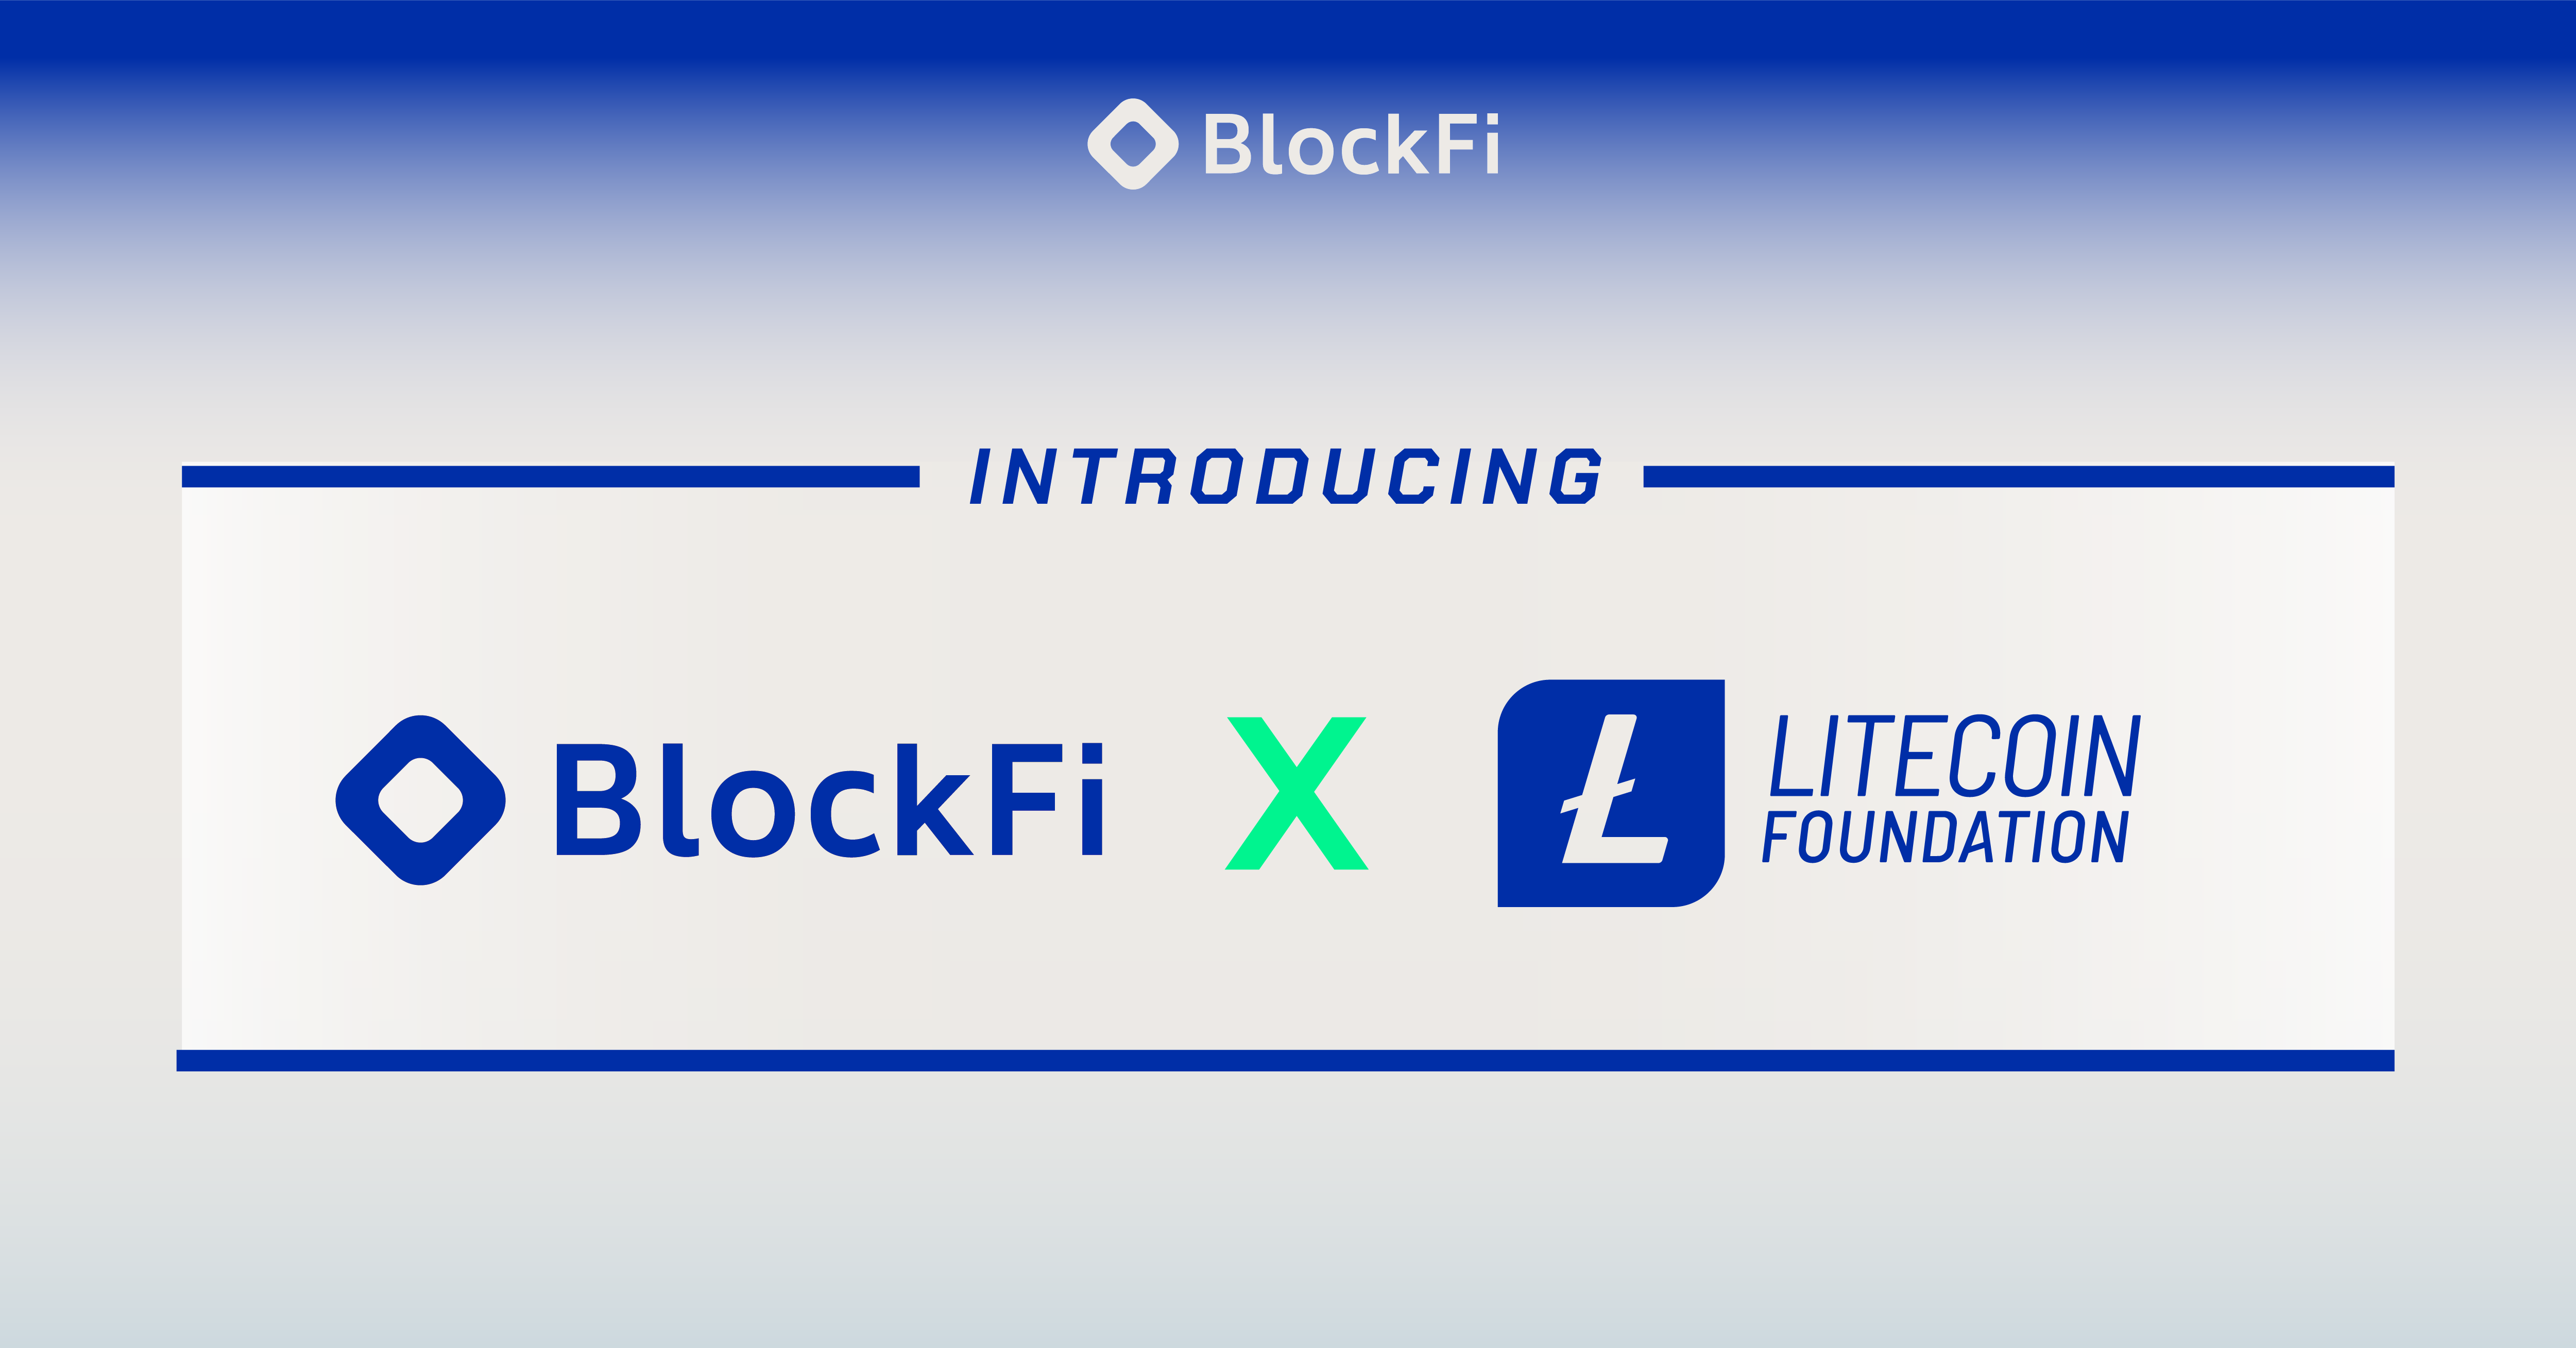 BlockFi Litecoin Foundation Partnership